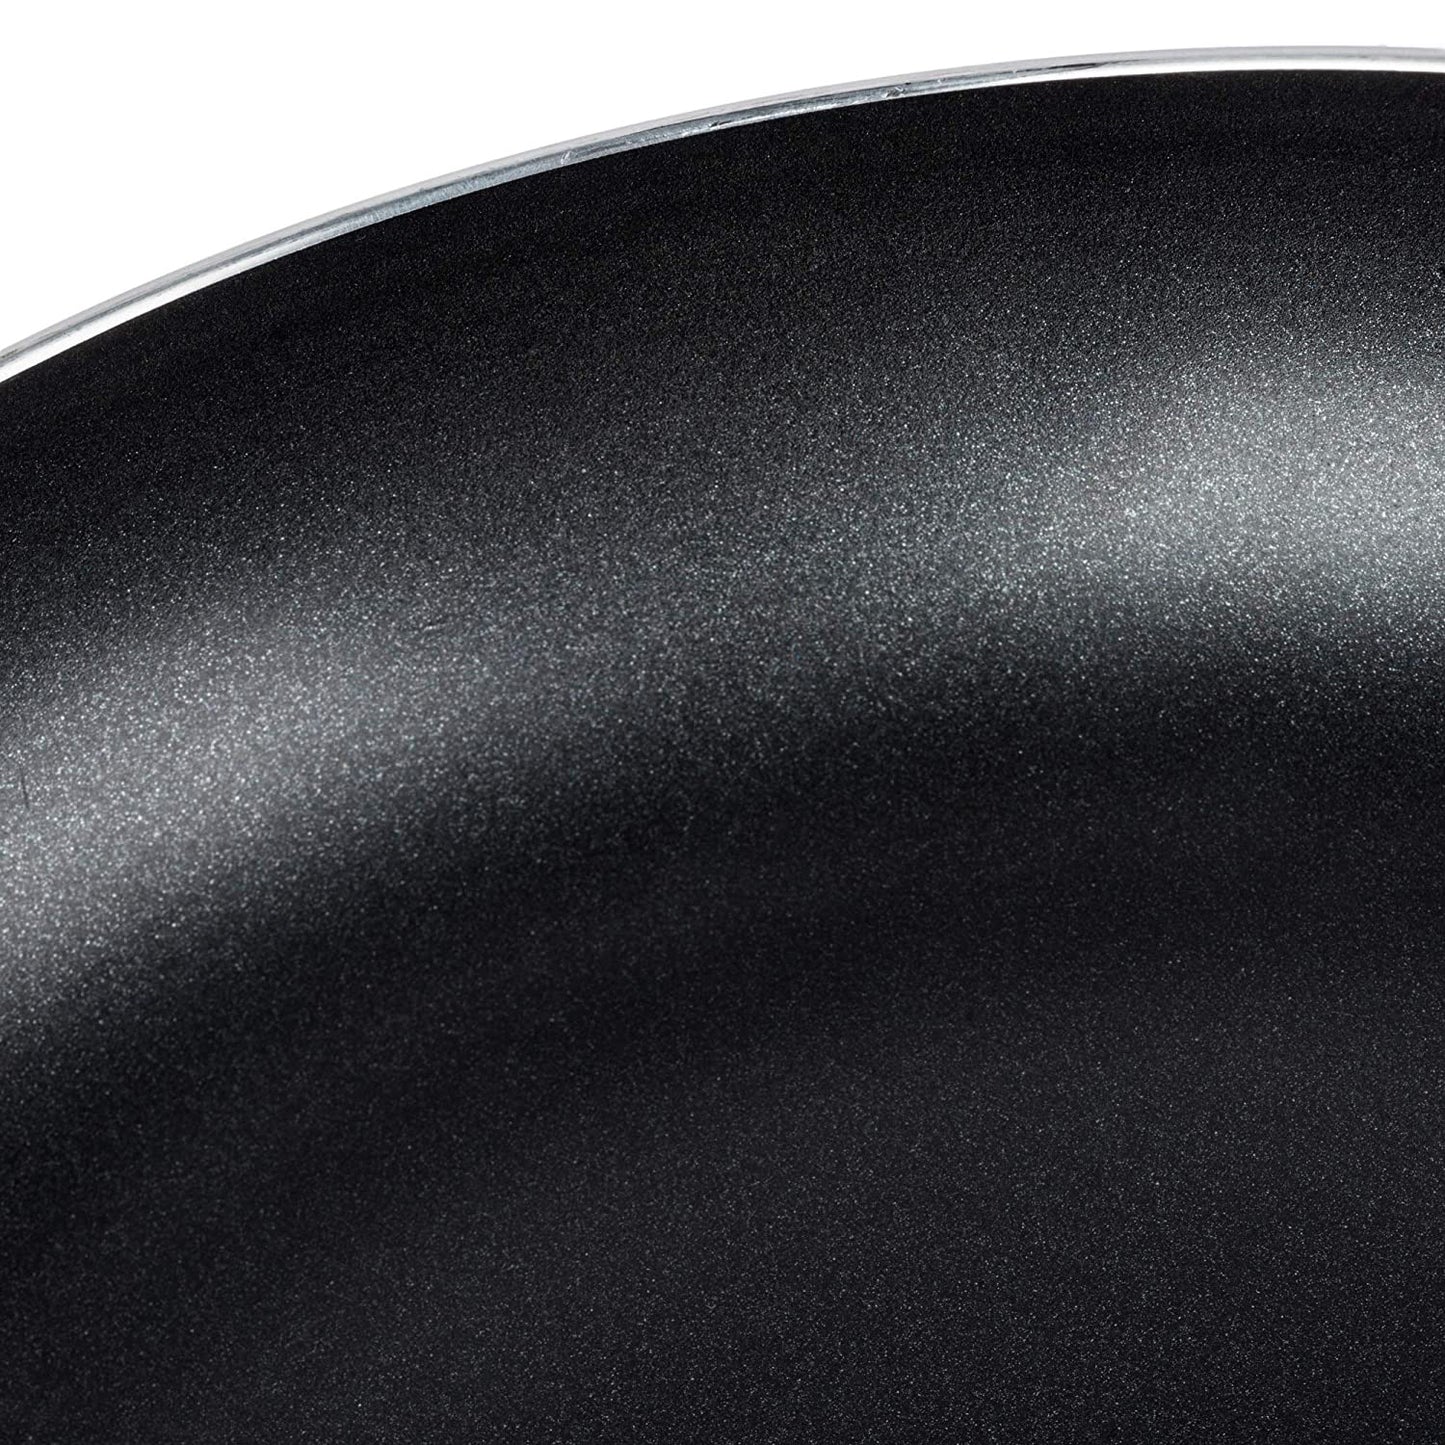 Premier Cookware Frying Non Stick Fry Pan with Glass Lid - Induction Suitable Saute Pan - 20cm